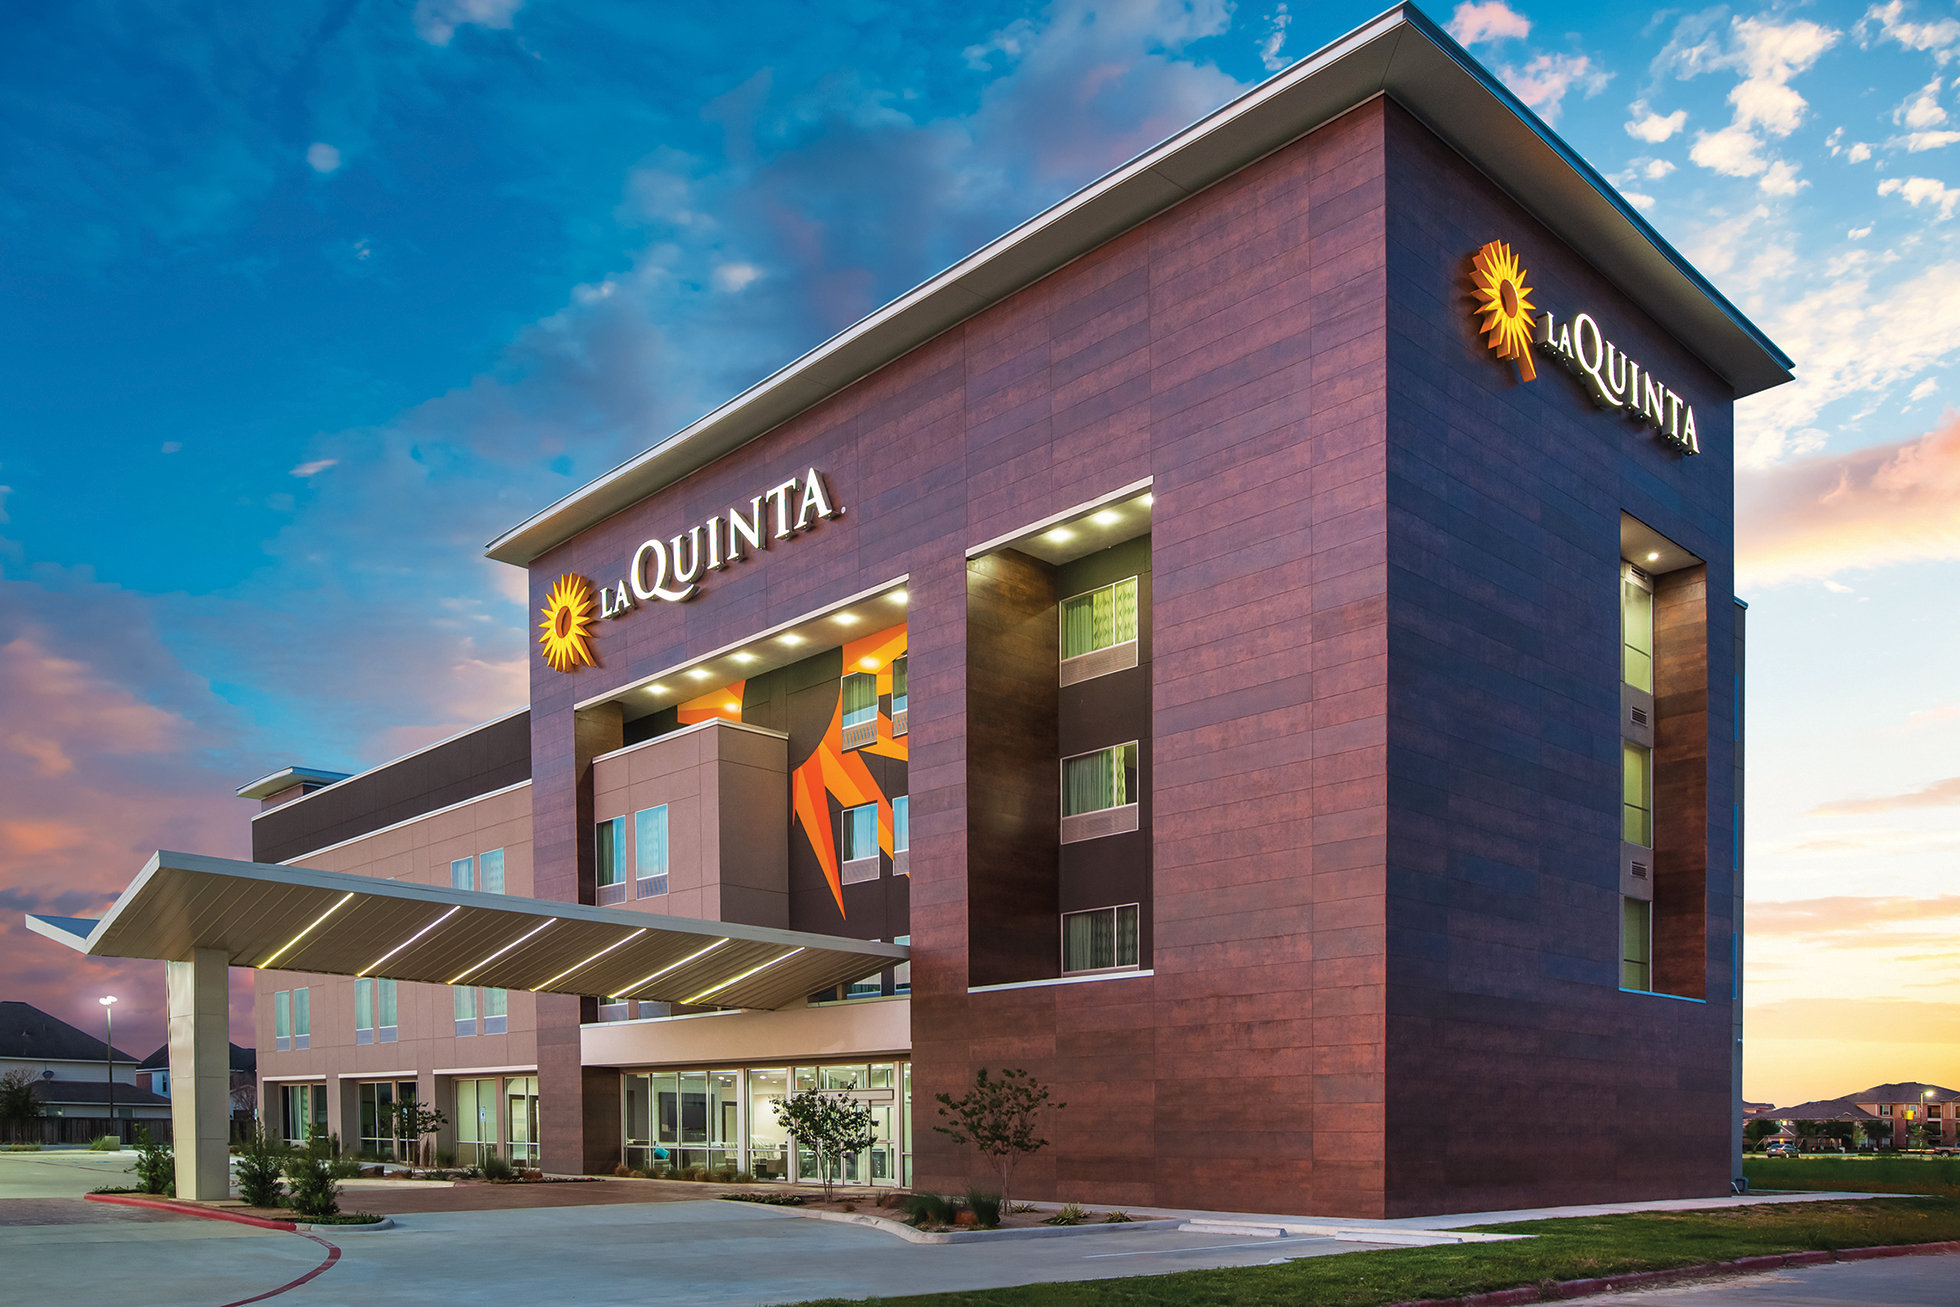 La Quinta Inn & Suites, Houston Cypress, TX